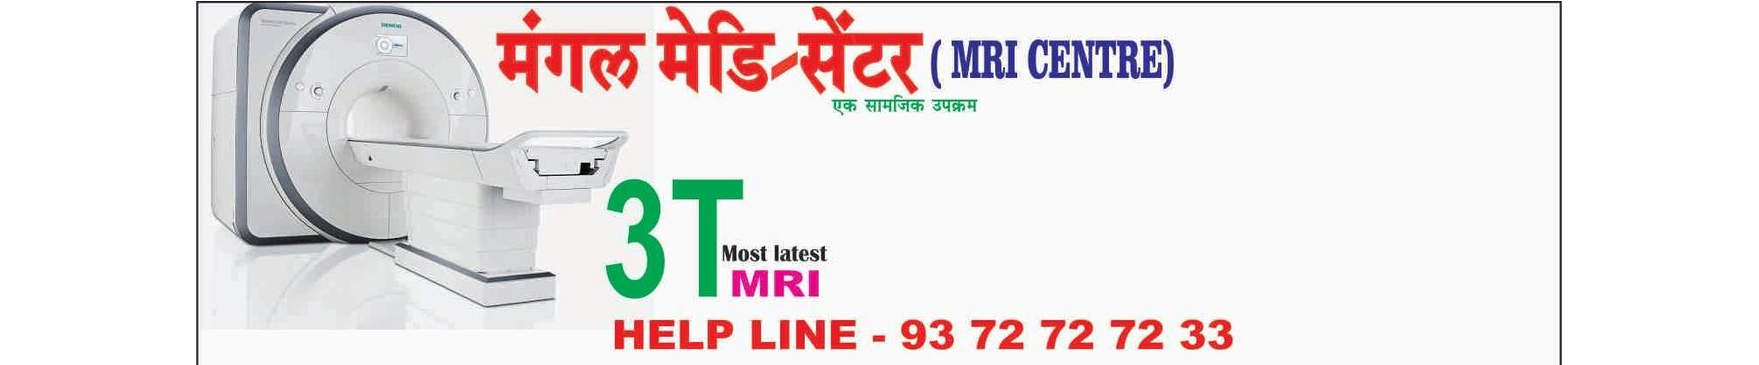 3t Mri Mangal Medi Center - Diagnostic Centre and Clinical Laboratory in Shreya Nagar, Aurangabad-Maharashtra